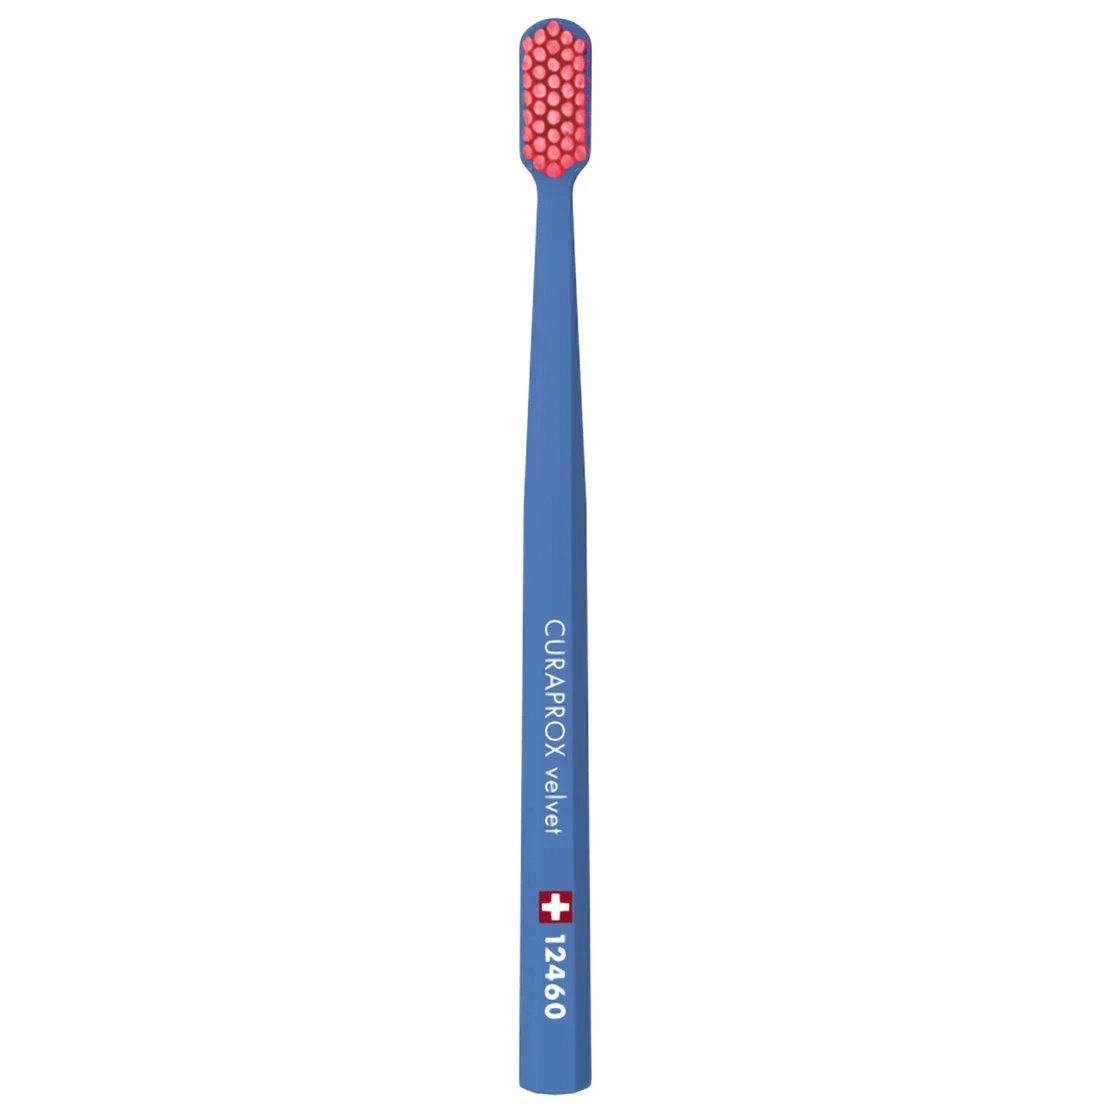 Curaprox CS 12460 Velvet Toothbrush Οδοντόβουρτσα με Εξαιρετικά Απαλές & Πυκνές Ίνες Curen για Πολύ Ευαίσθητα Δόντια 1 Τεμάχιο – Σκούρο Μπλε / Ροζ